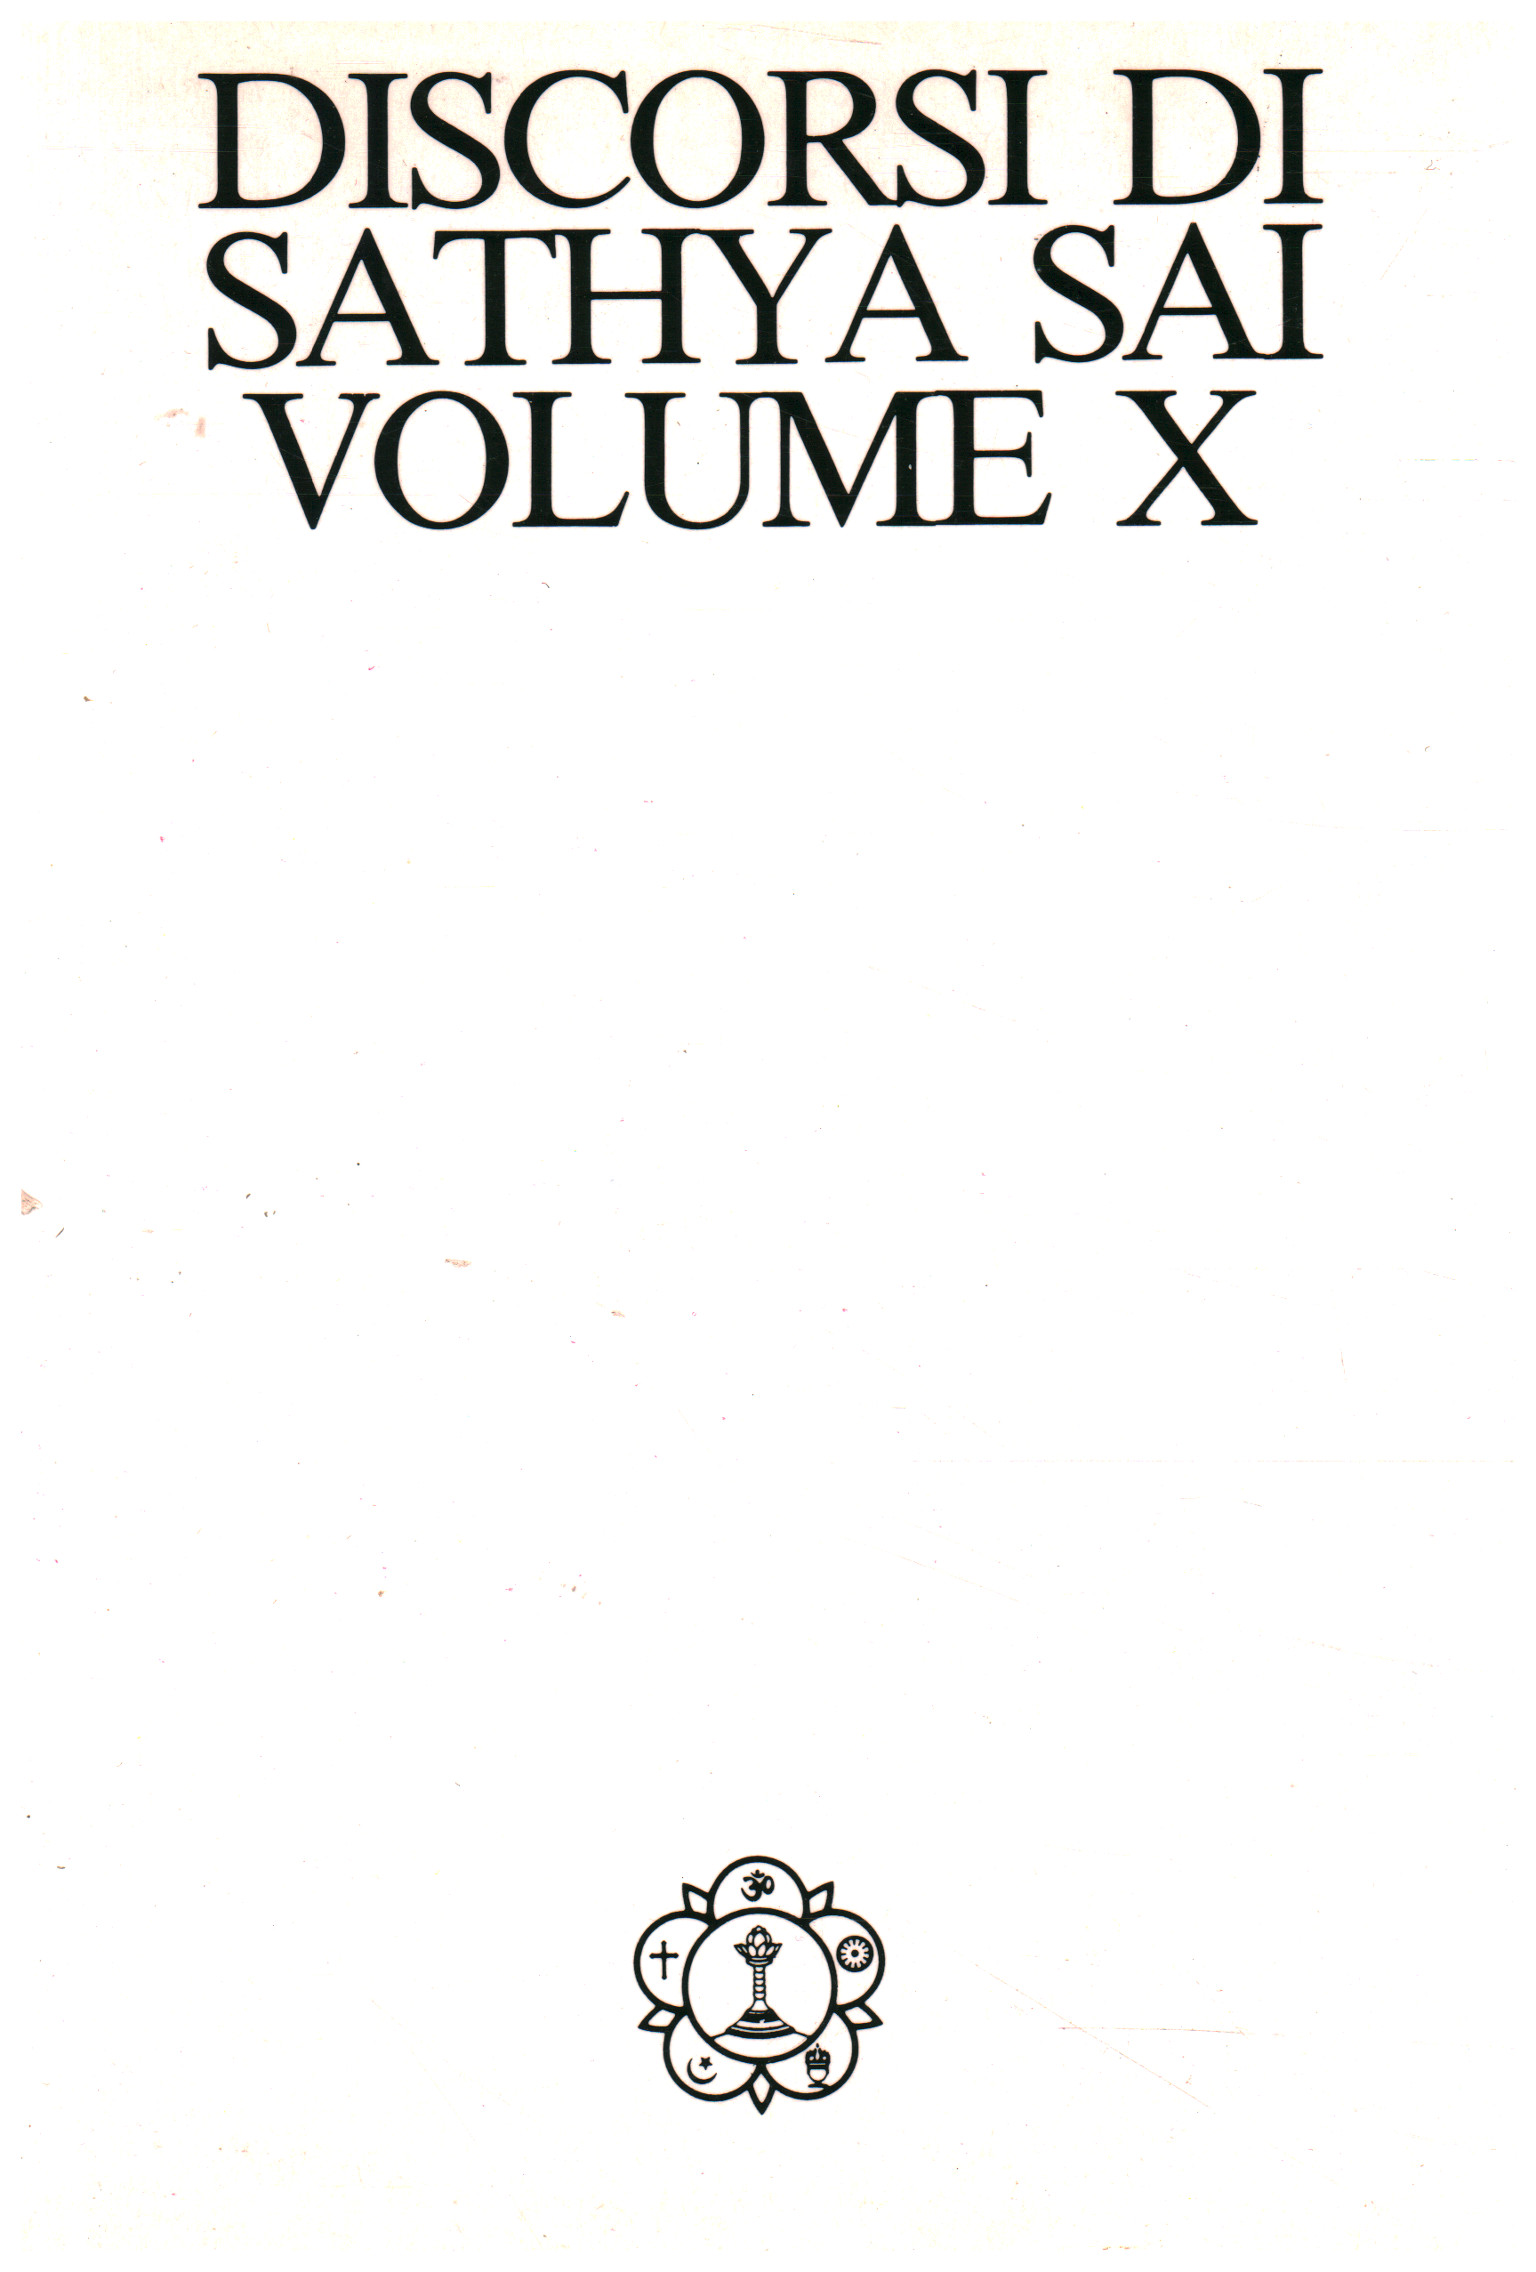 Discorsi di Sathya Sai volume X, s.a.